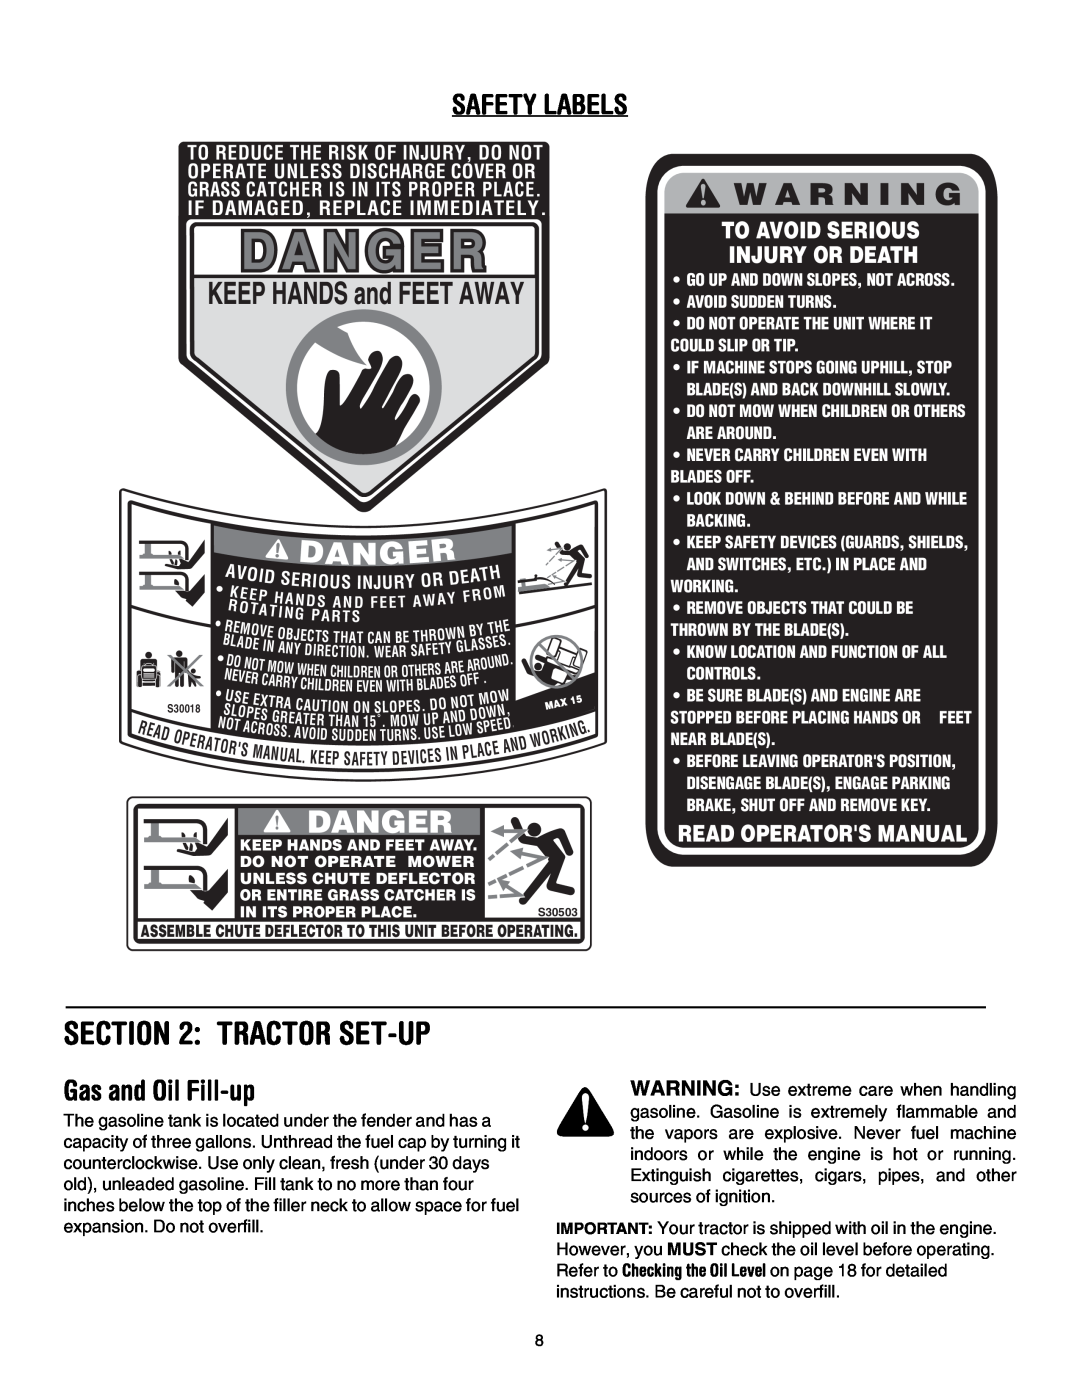 Bolens LT1024 manual Tractor Set-Up, Safety Labels, Gas and Oil Fill-up, Danger, W A R N I N G, Read Operators Manual 